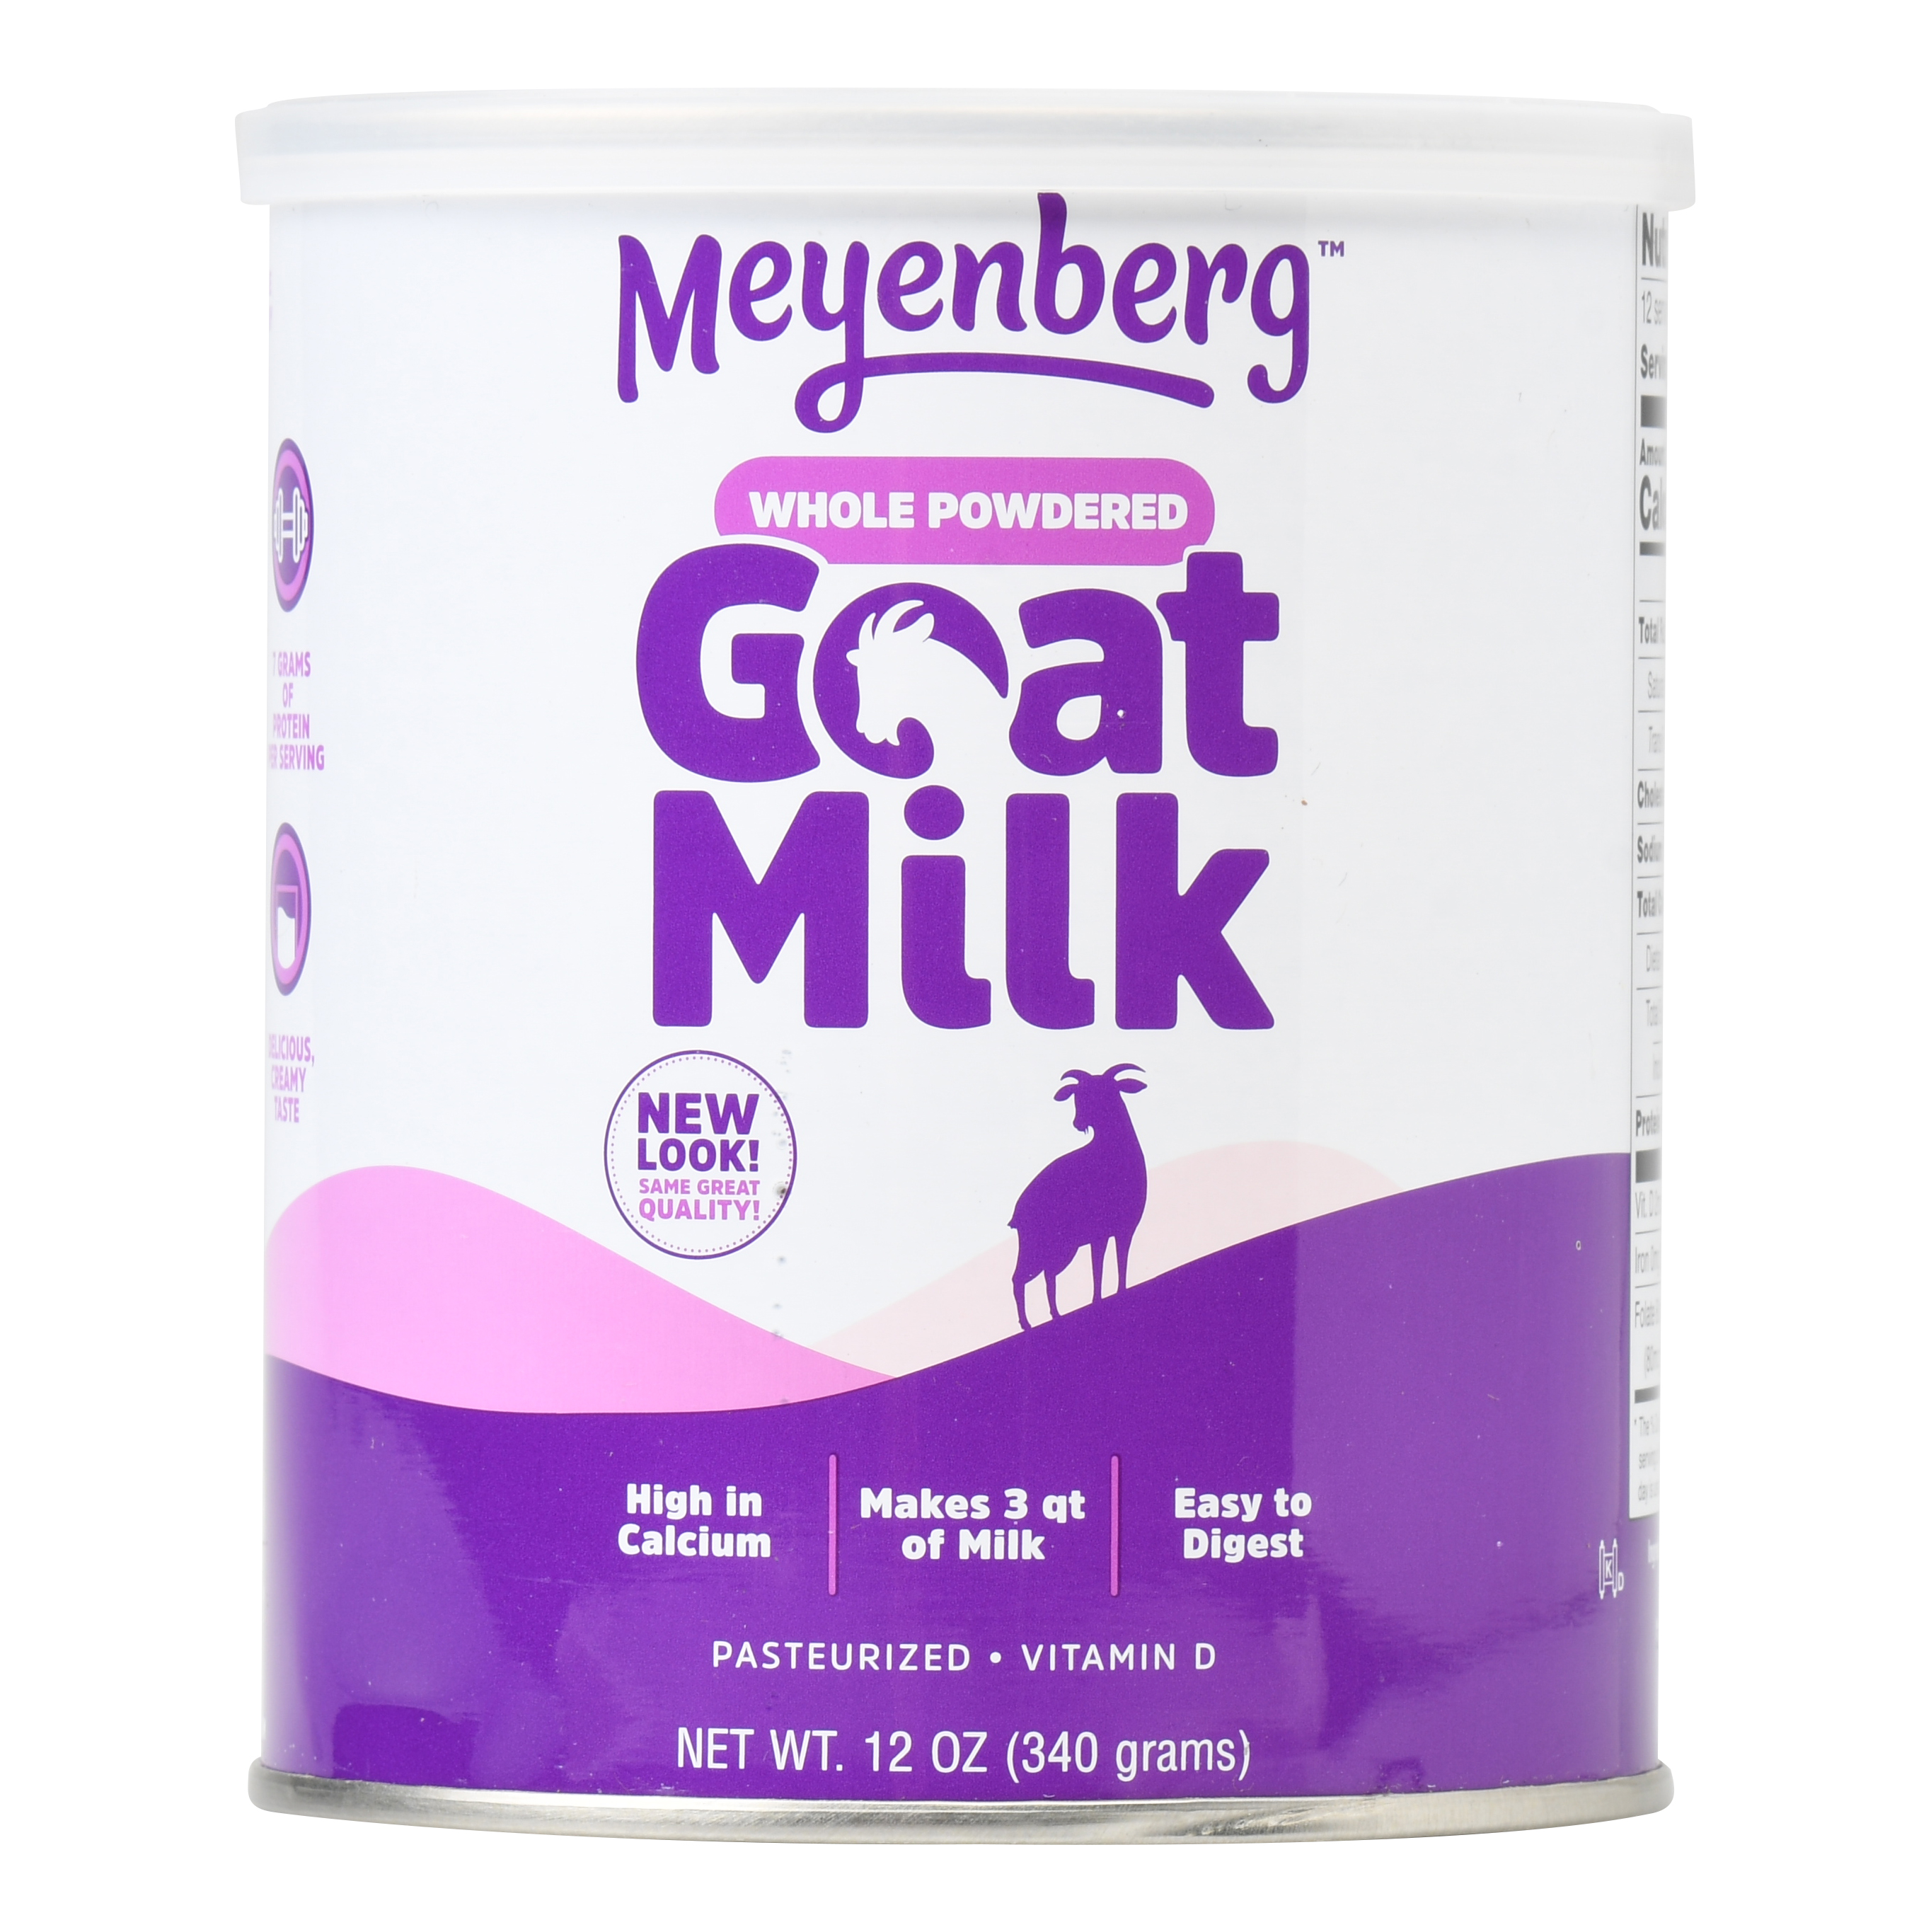 Meyenberg Whole Powdered Goat Milk Vitamin D, 12 oz - image 1 of 2